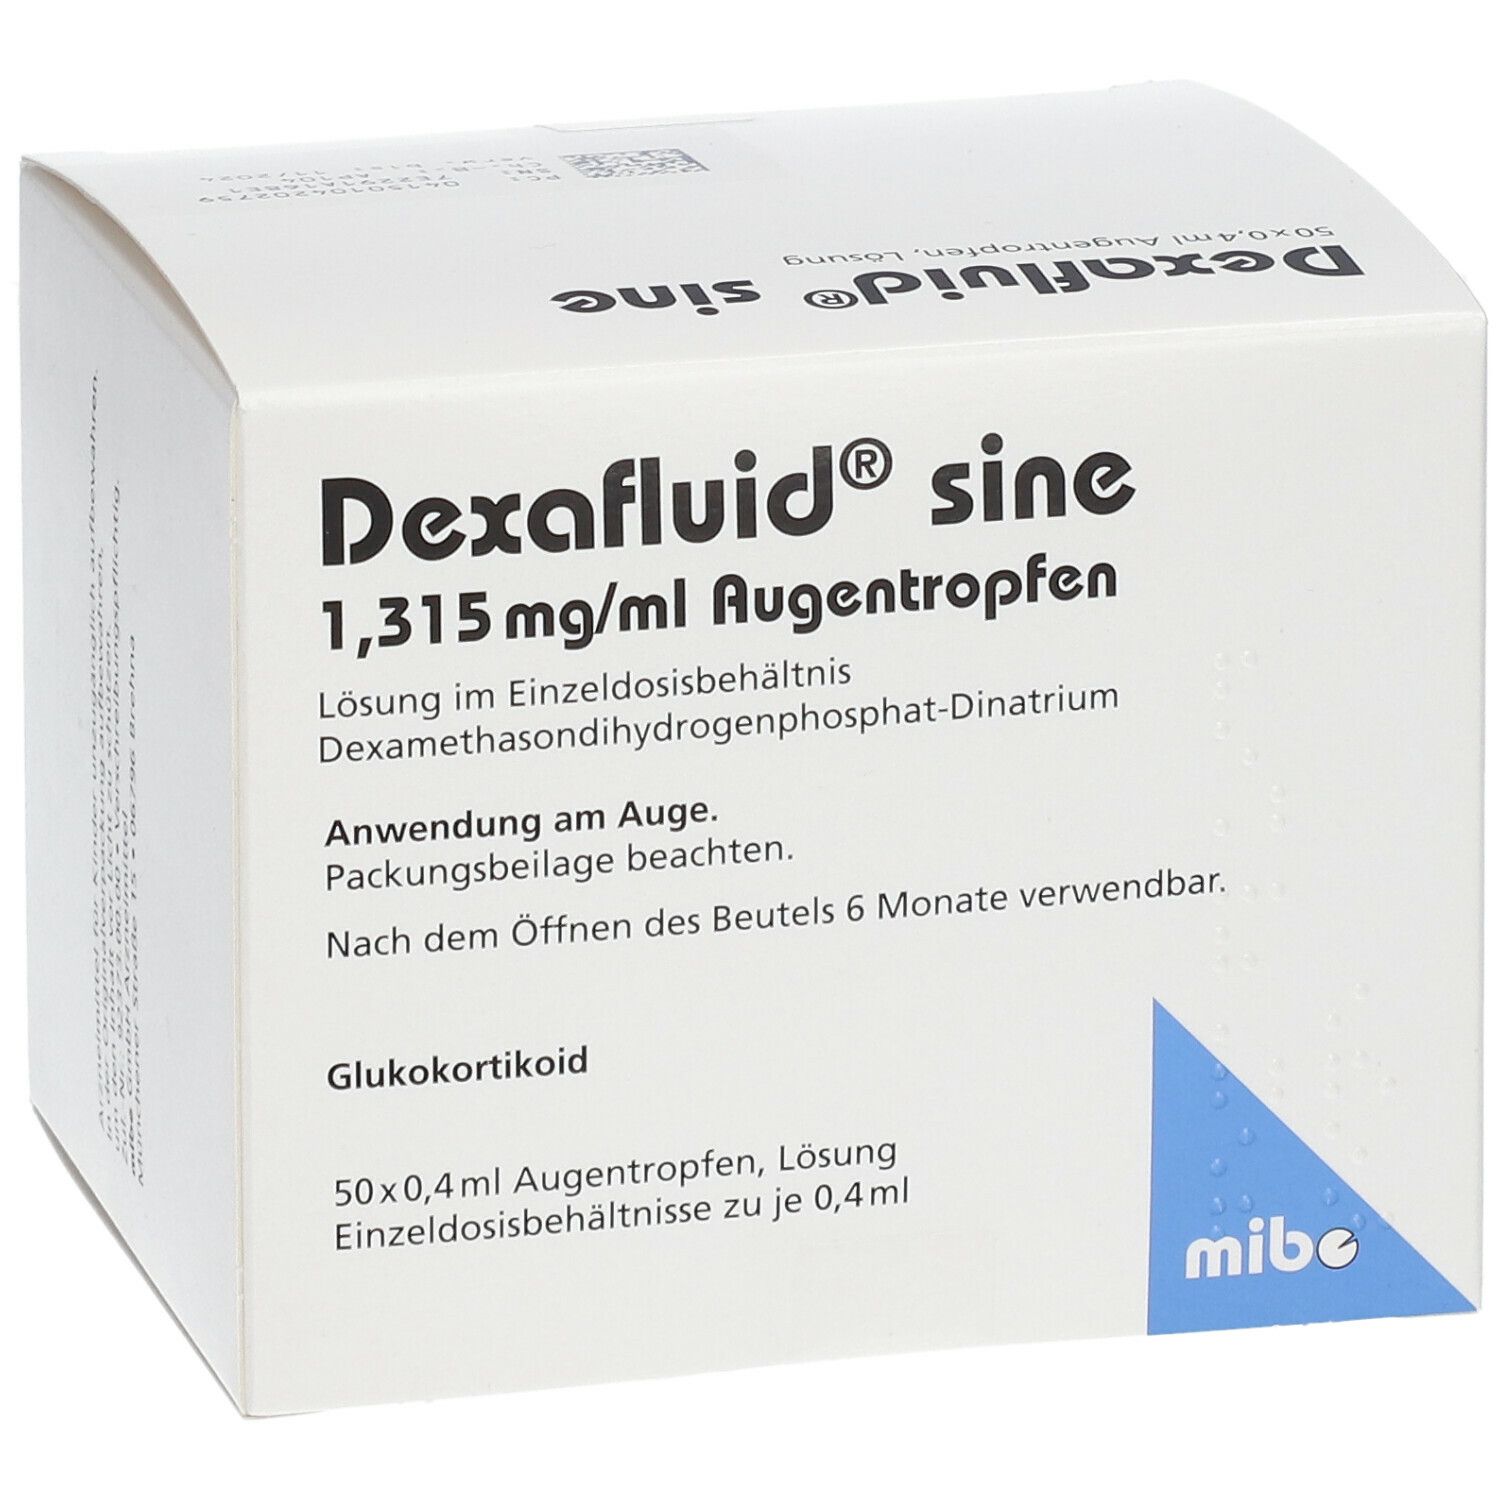 Dexafluid Sine 1,315 mg/ml